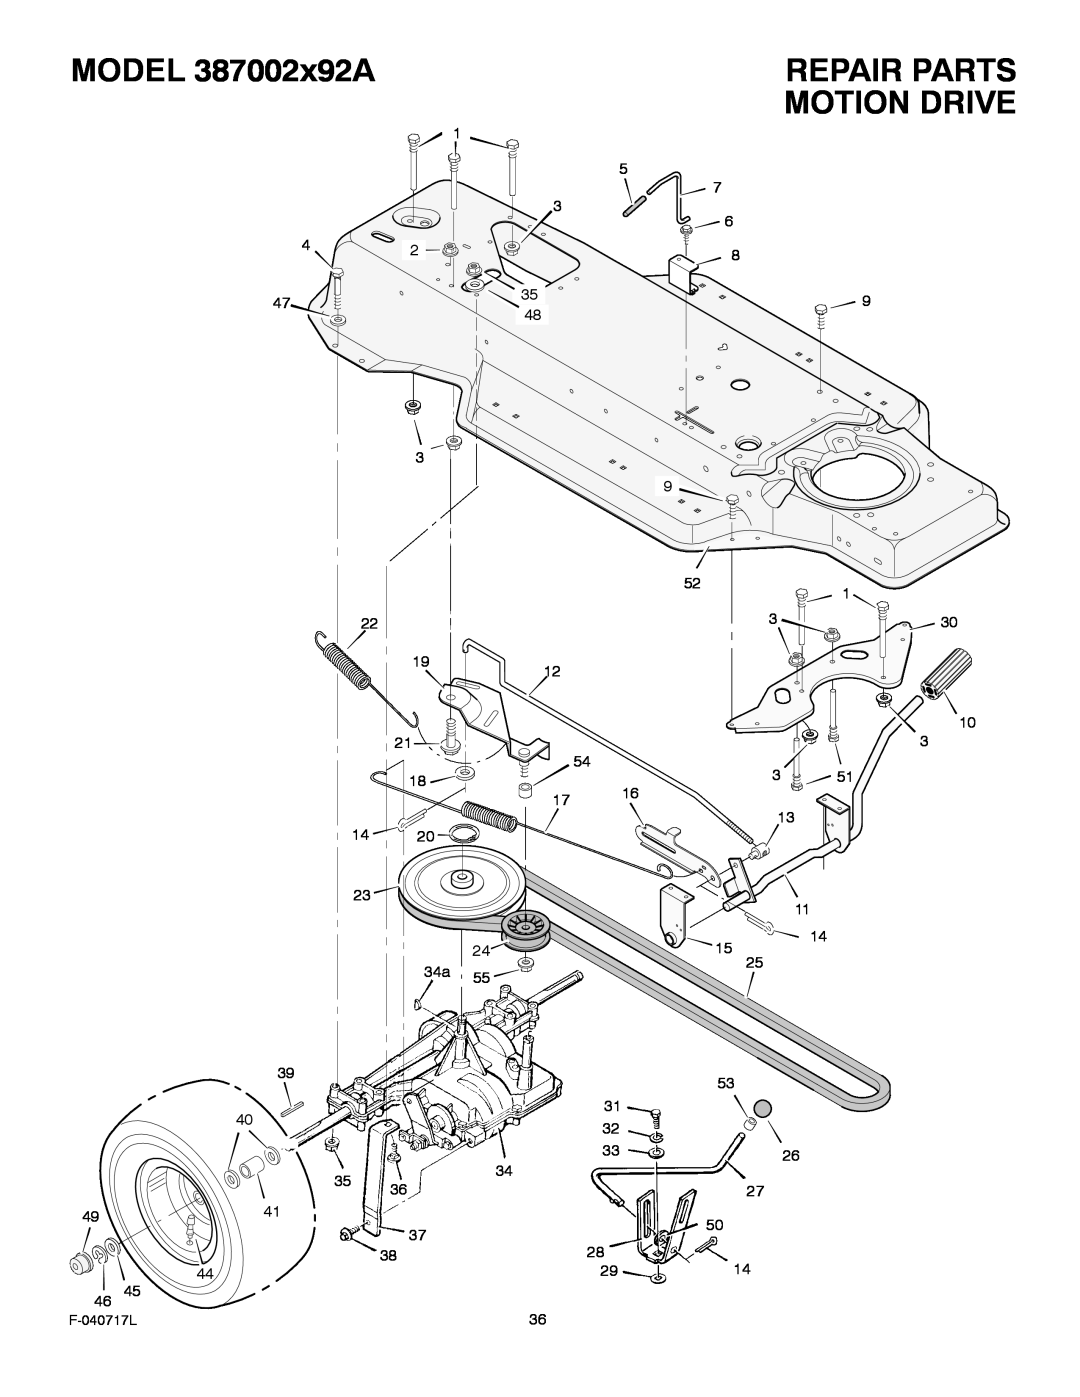 Murray manual Repair Parts Motion Drive, MODEL 387002x92A, 4941 